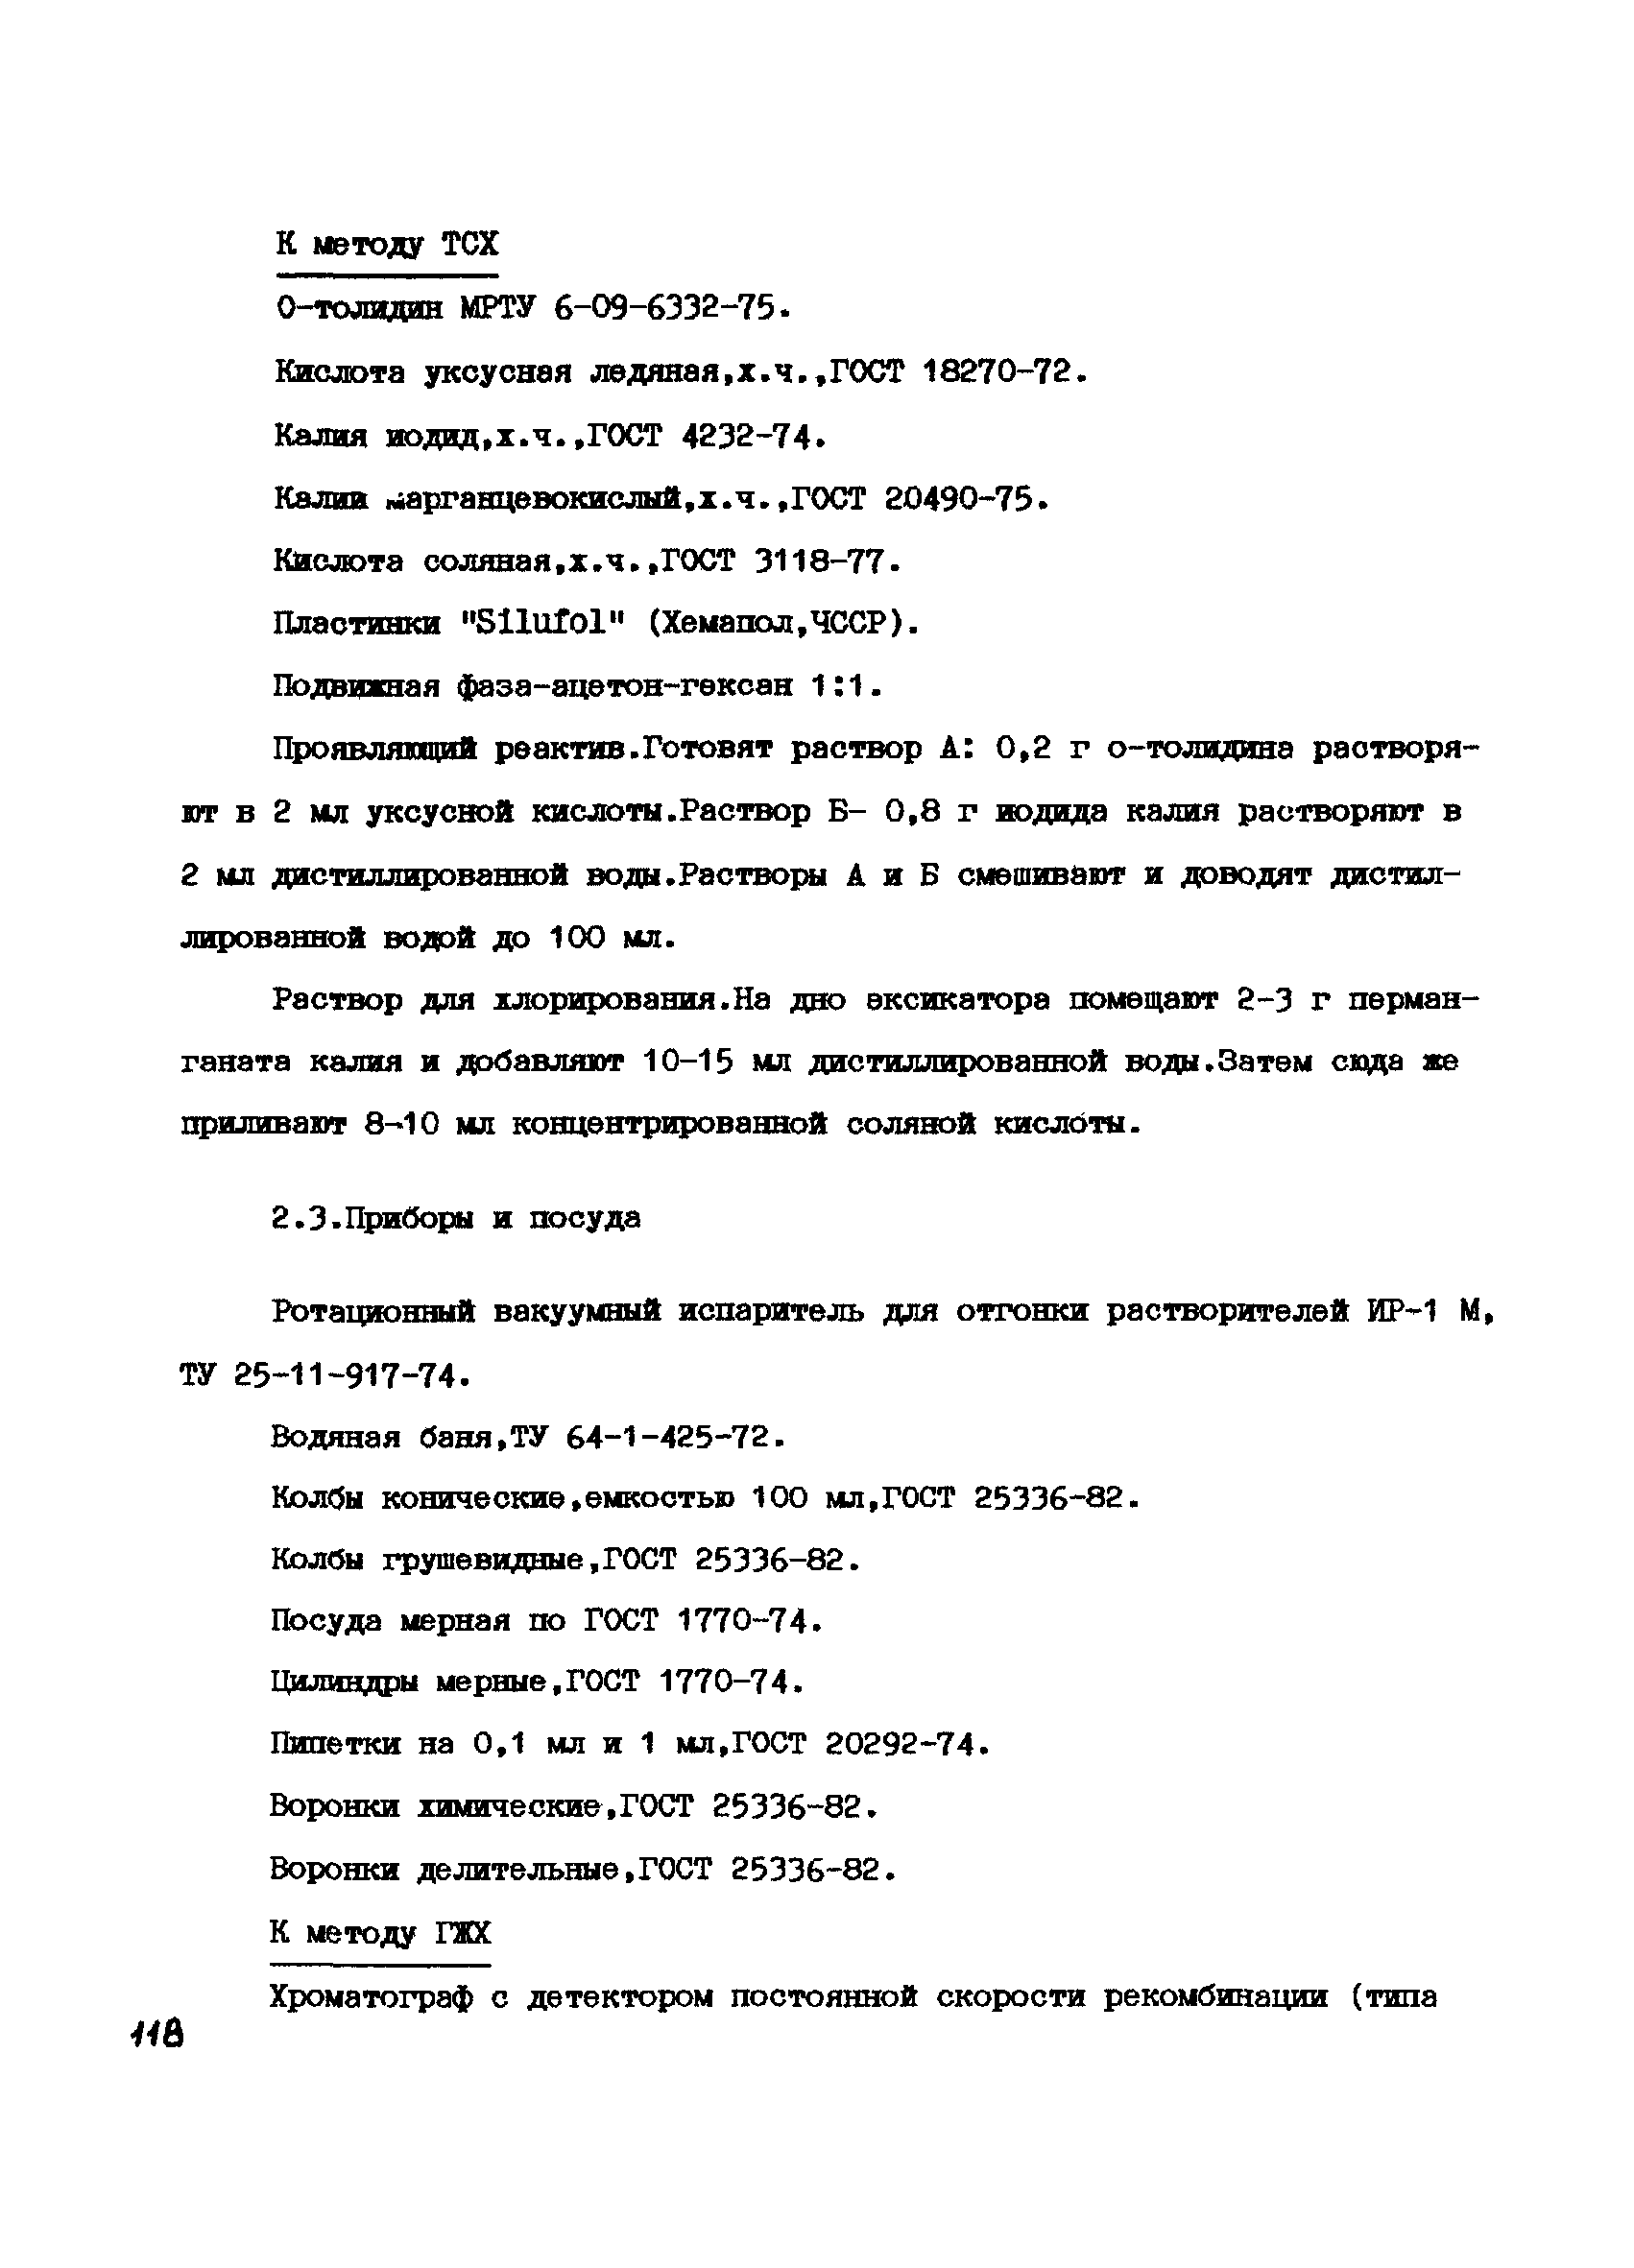 ВМУ 6206-91